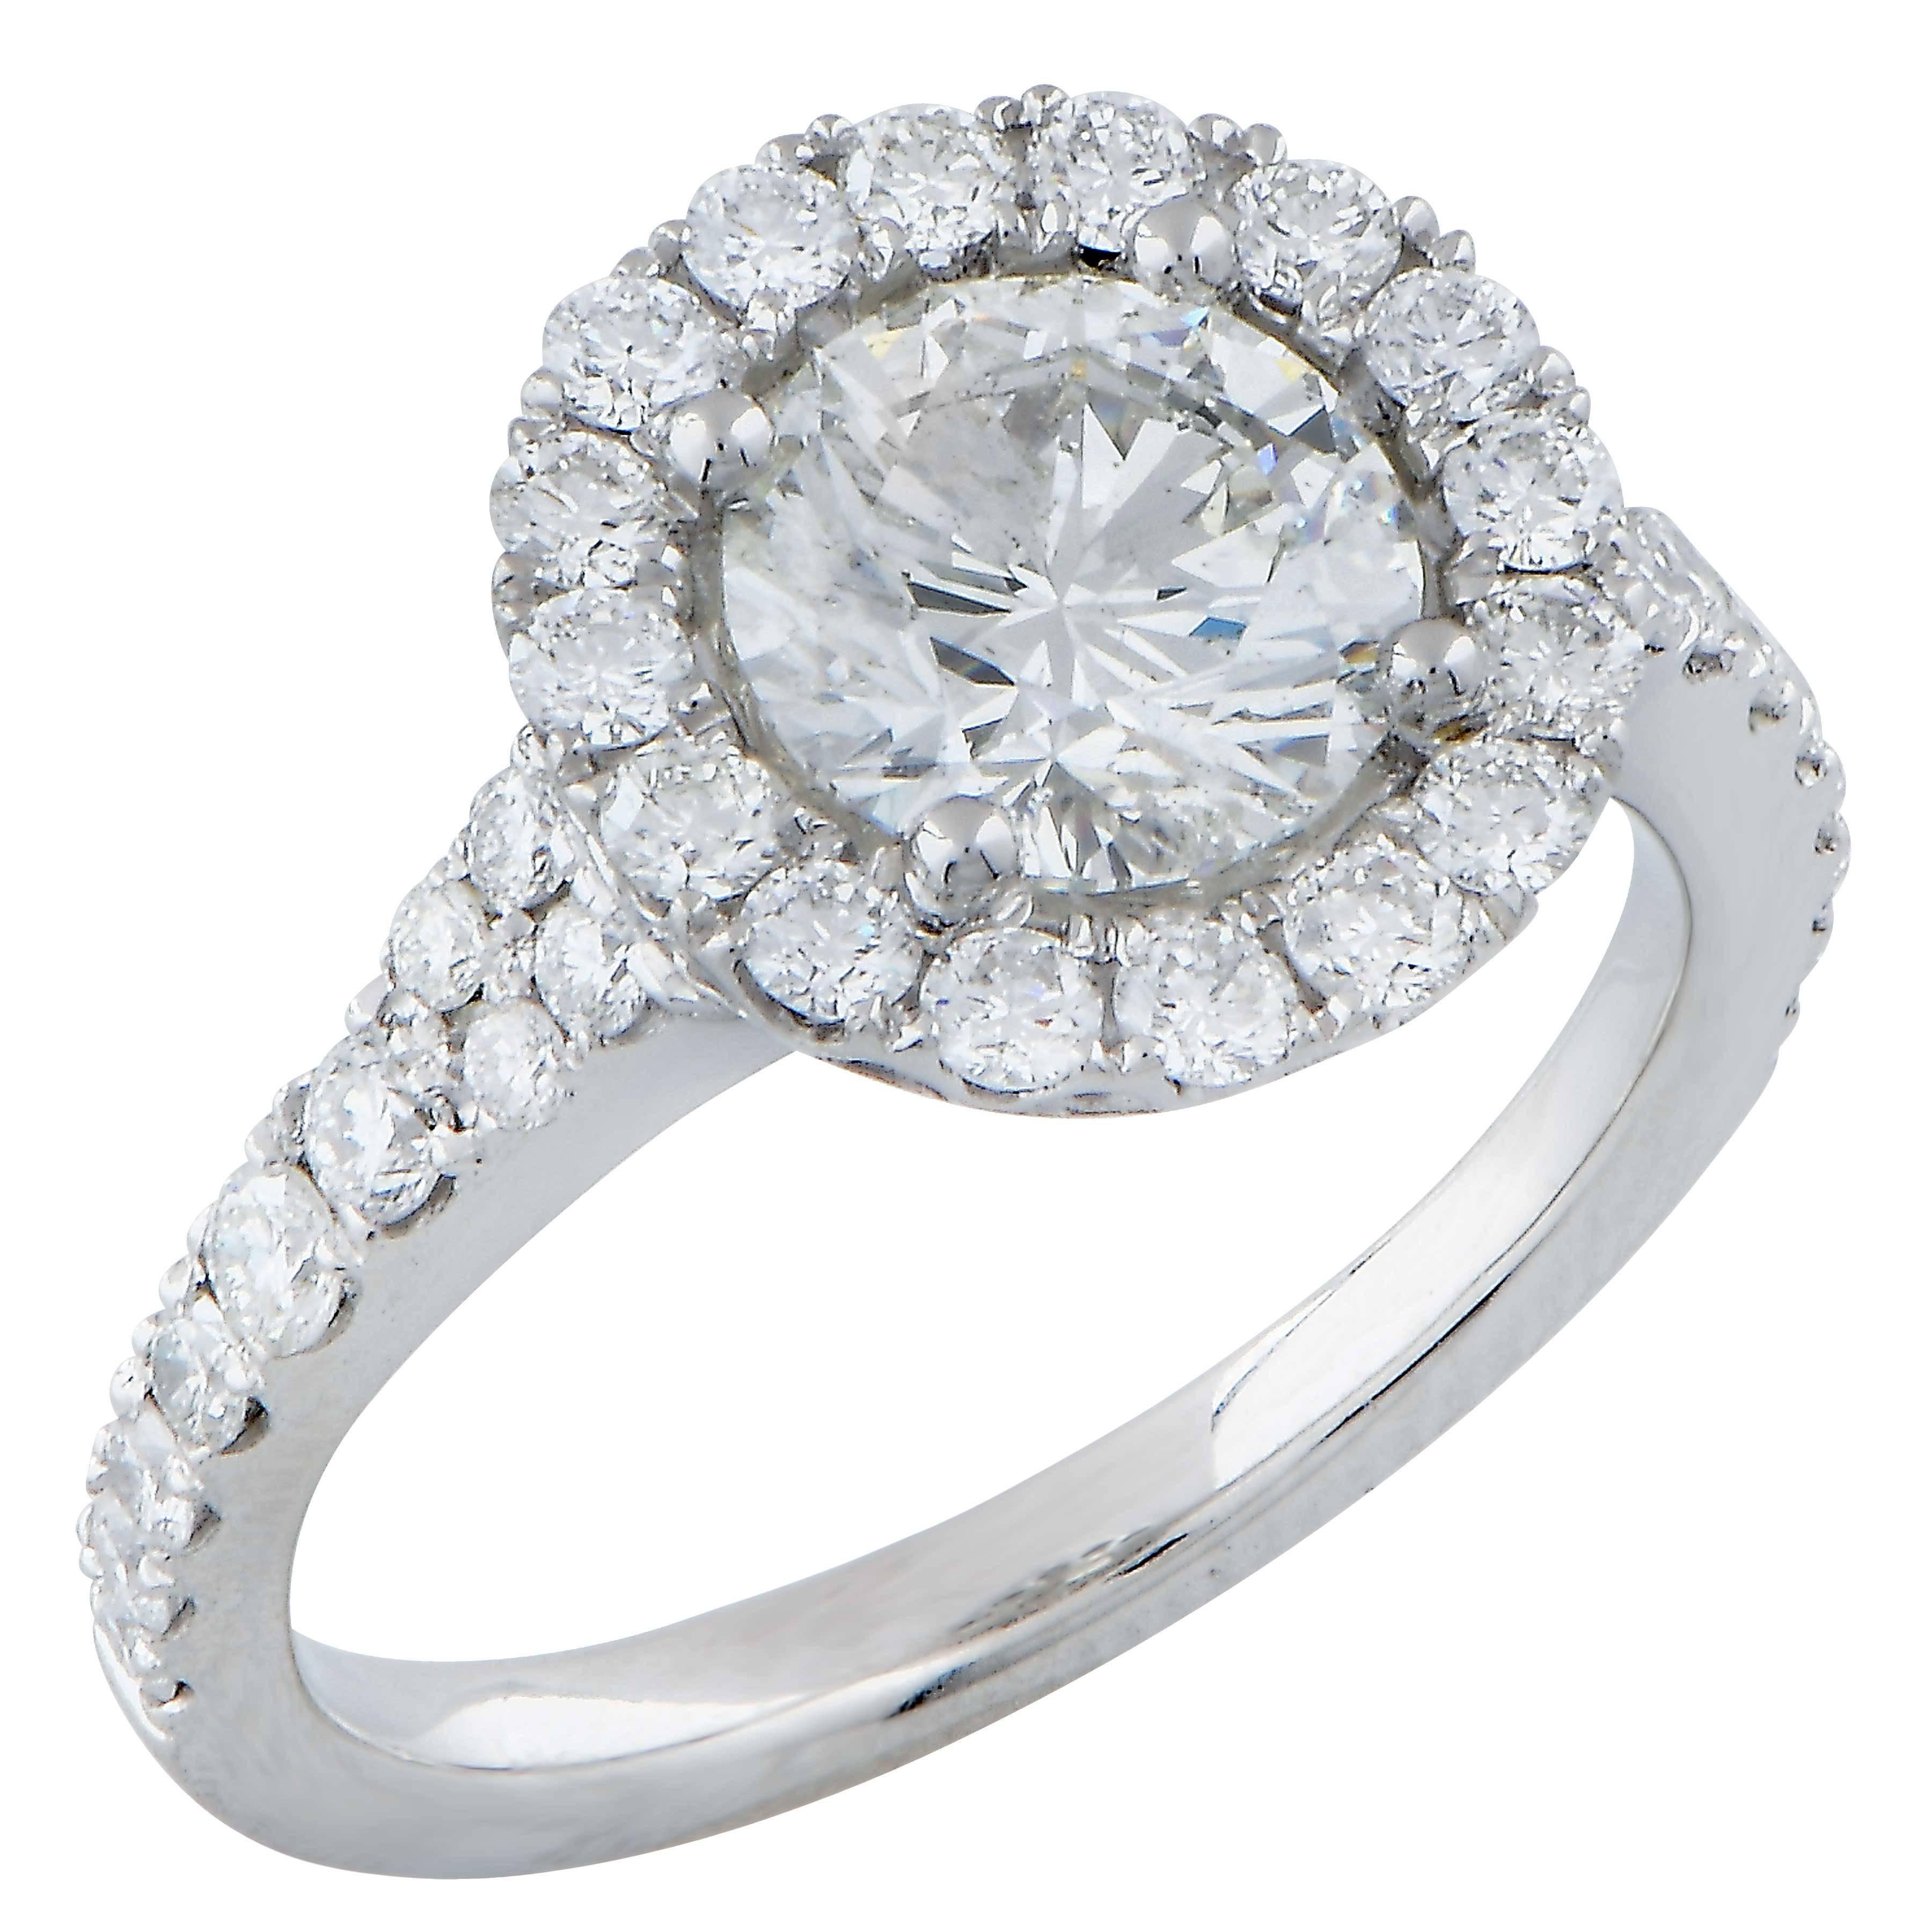 1.52 Carat J/ I1 GIA Graded Round Brilliant Cut Diamond Engagement Ring